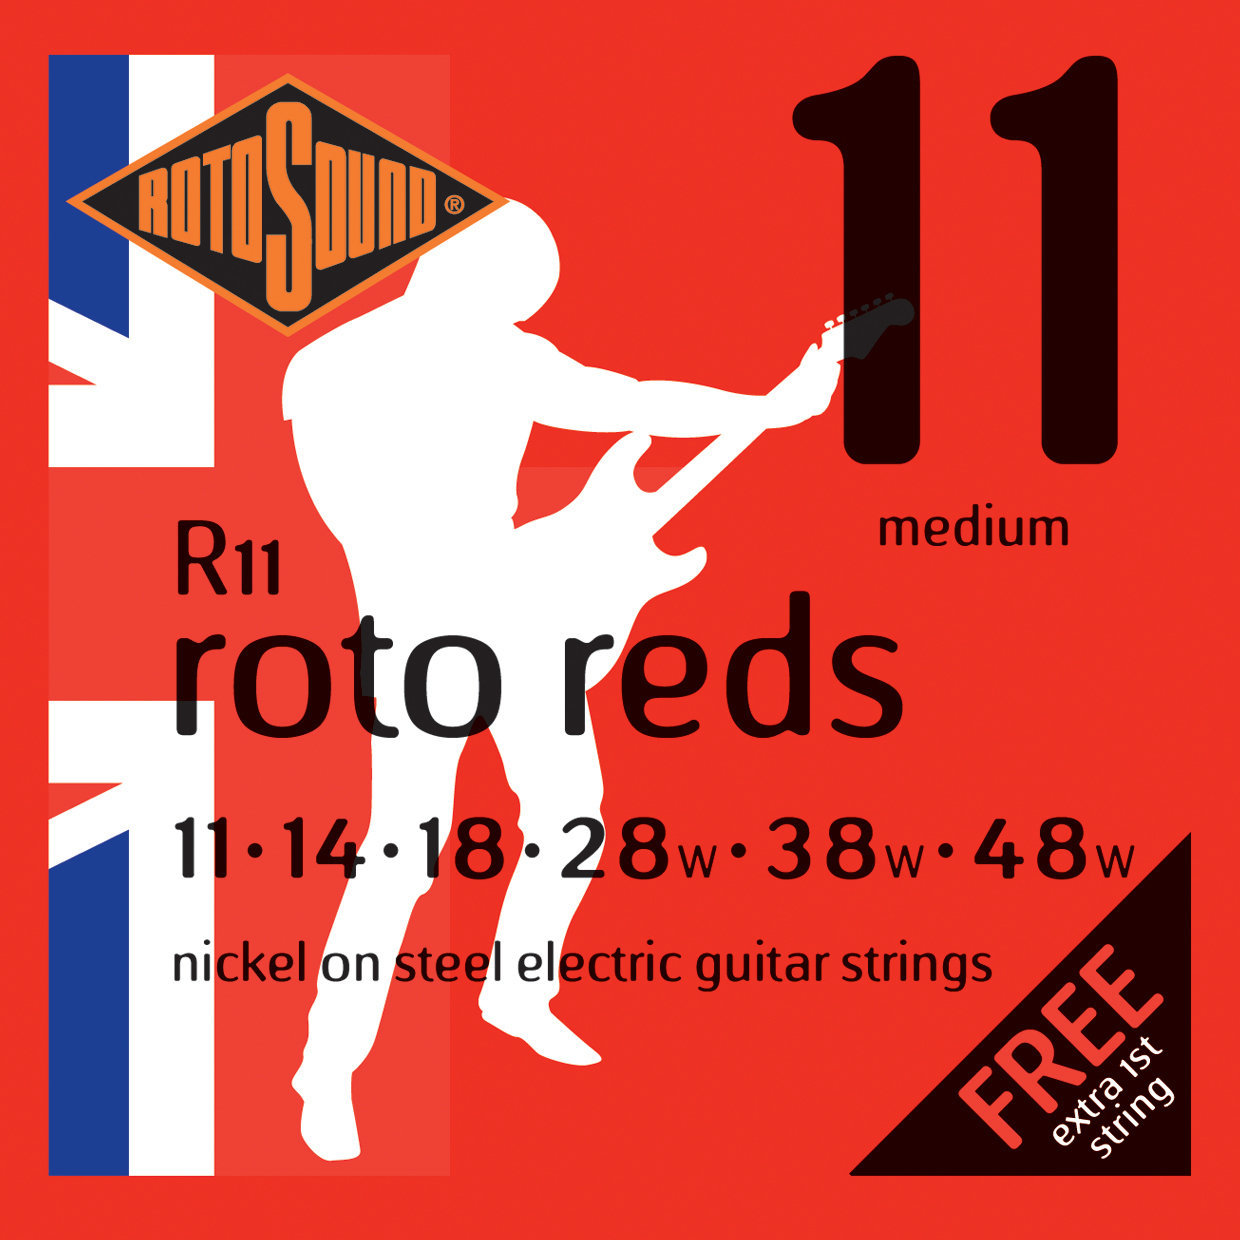 Struny do gitary elektrycznej Rotosound R11